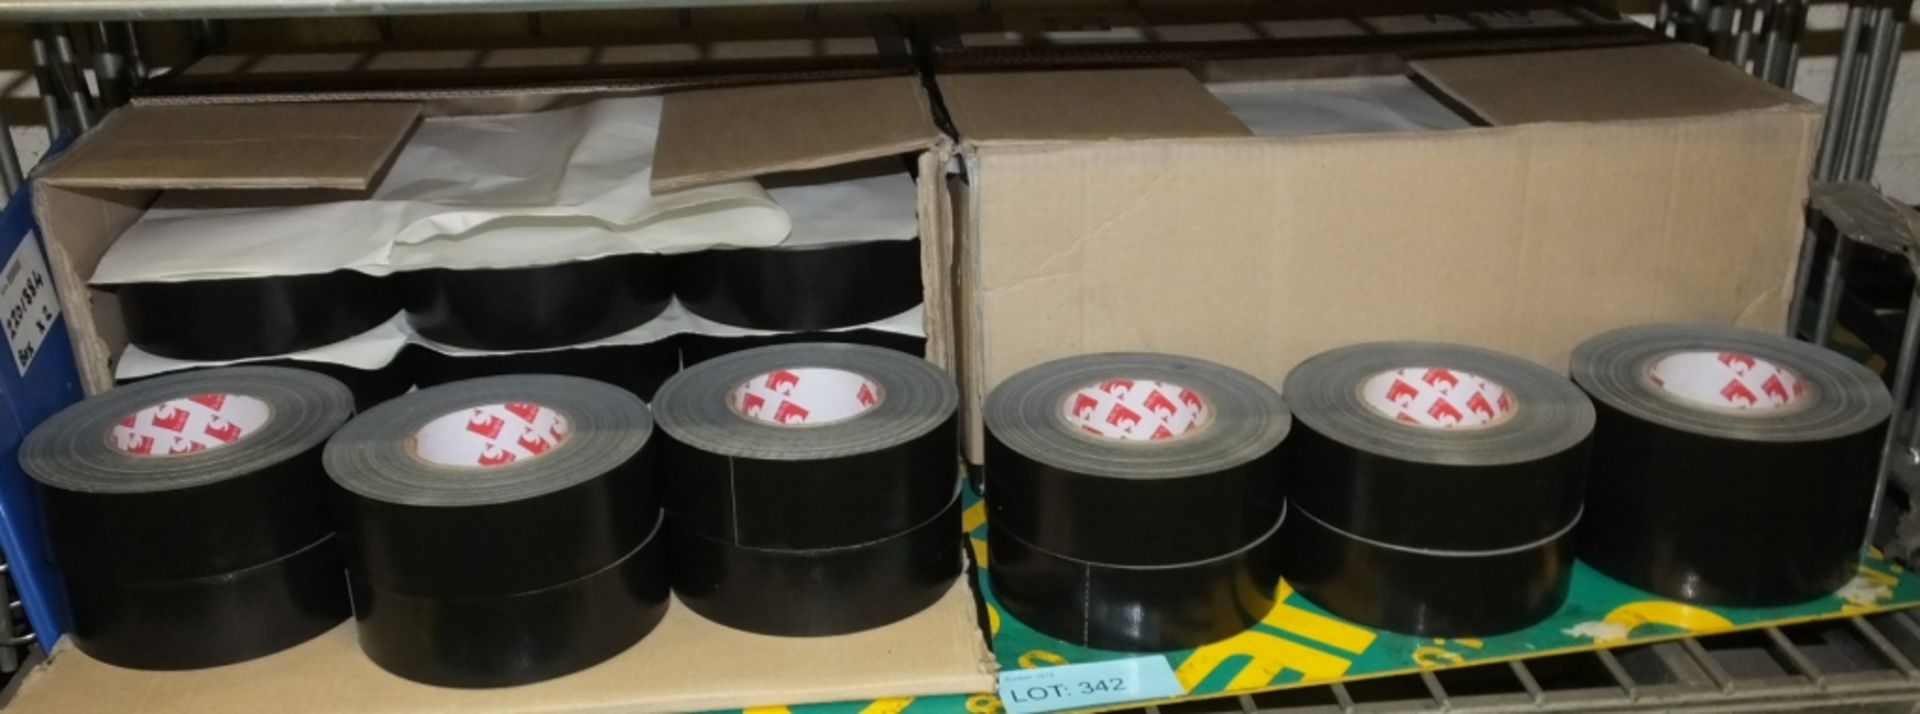 Scapa Adhesive Tape Black 24 per Box - 2 boxes